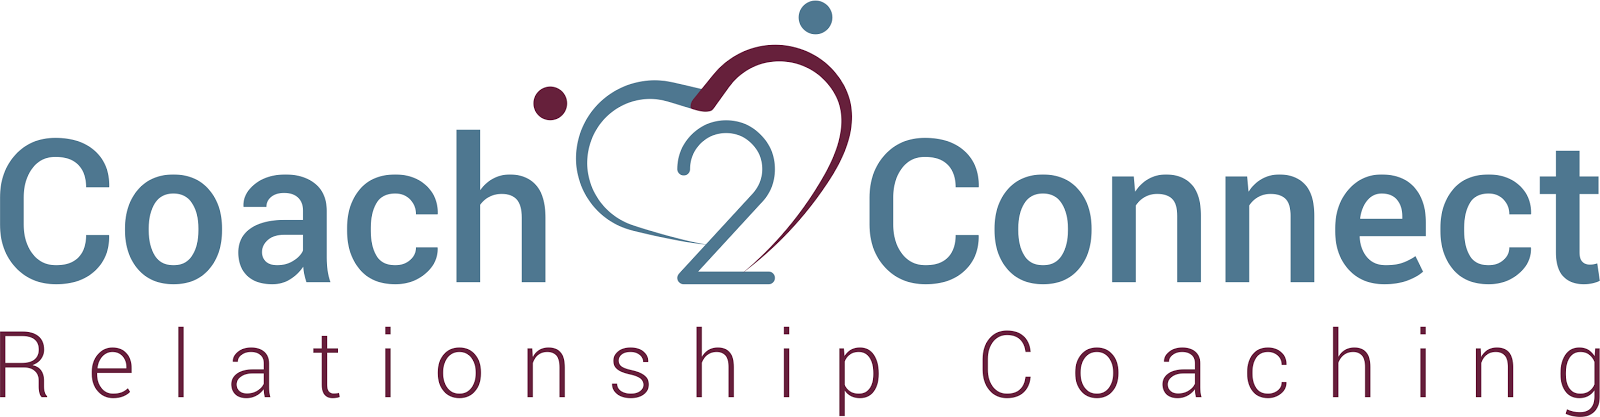 Relationship Coaching - Coach 2 Connect